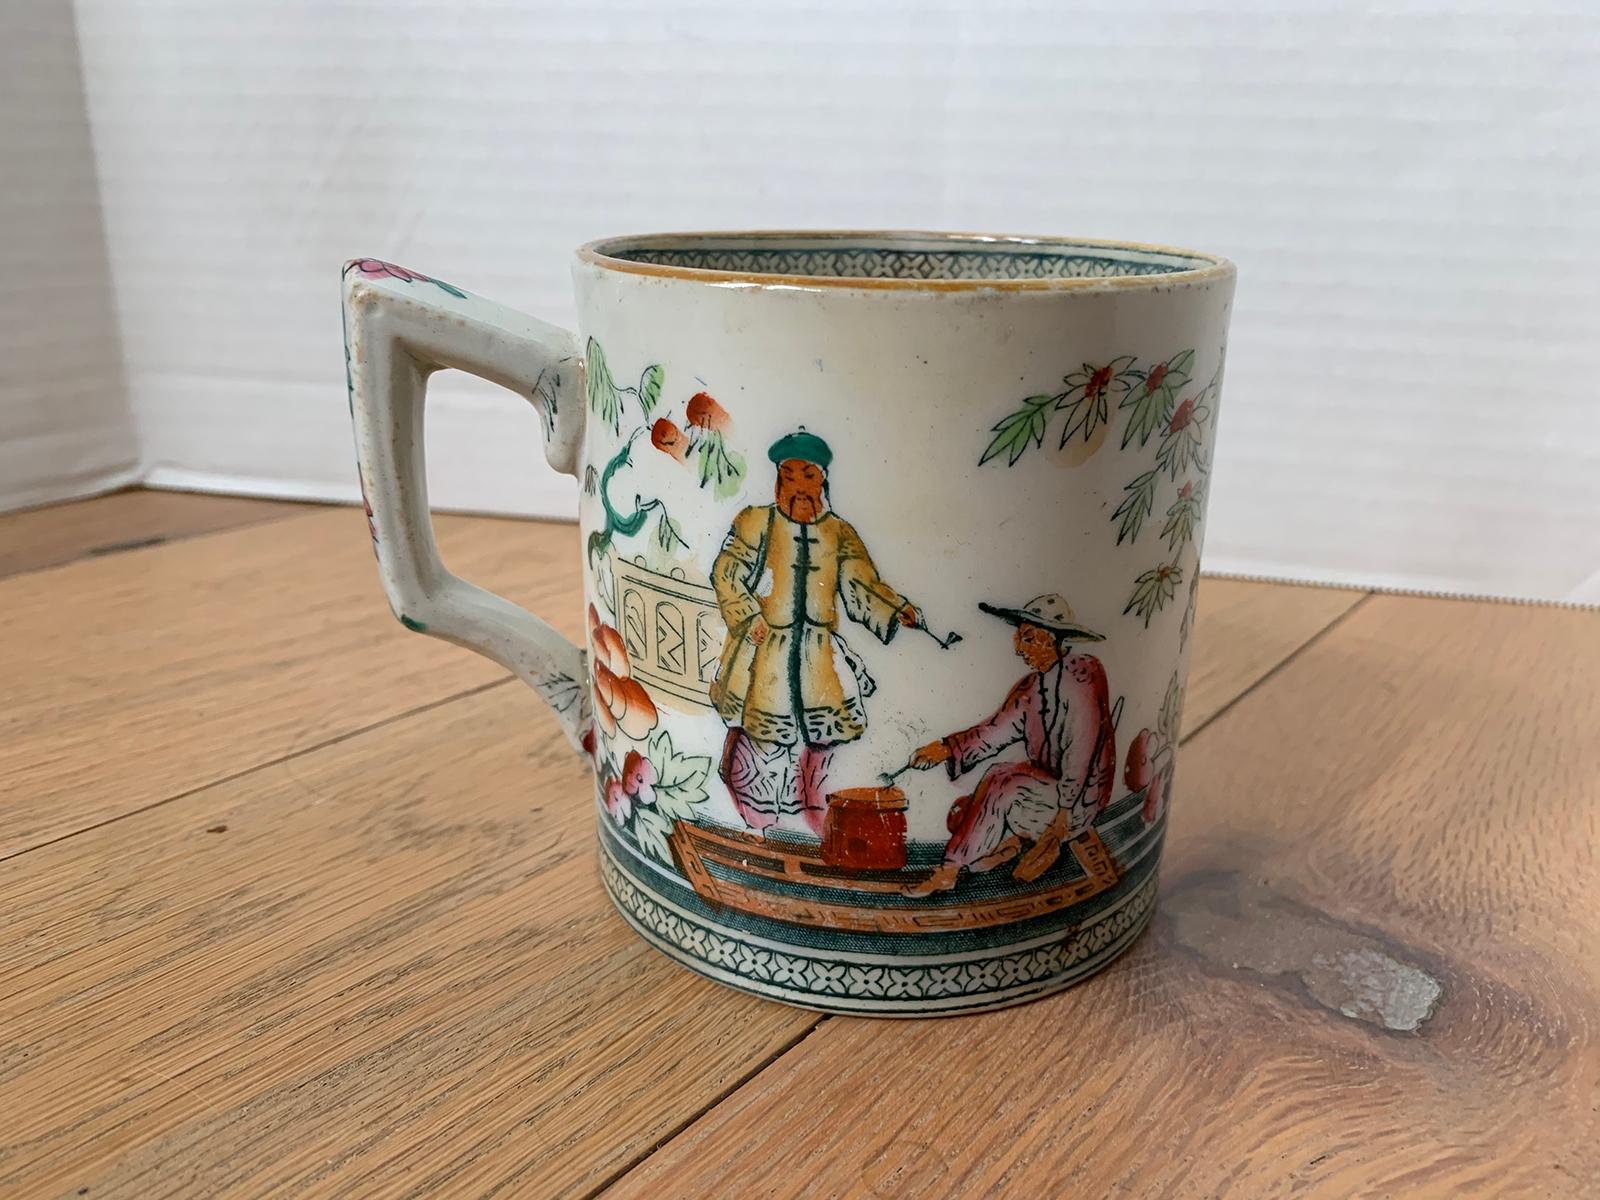 19th-20th century English porcelain mug, unmarked.